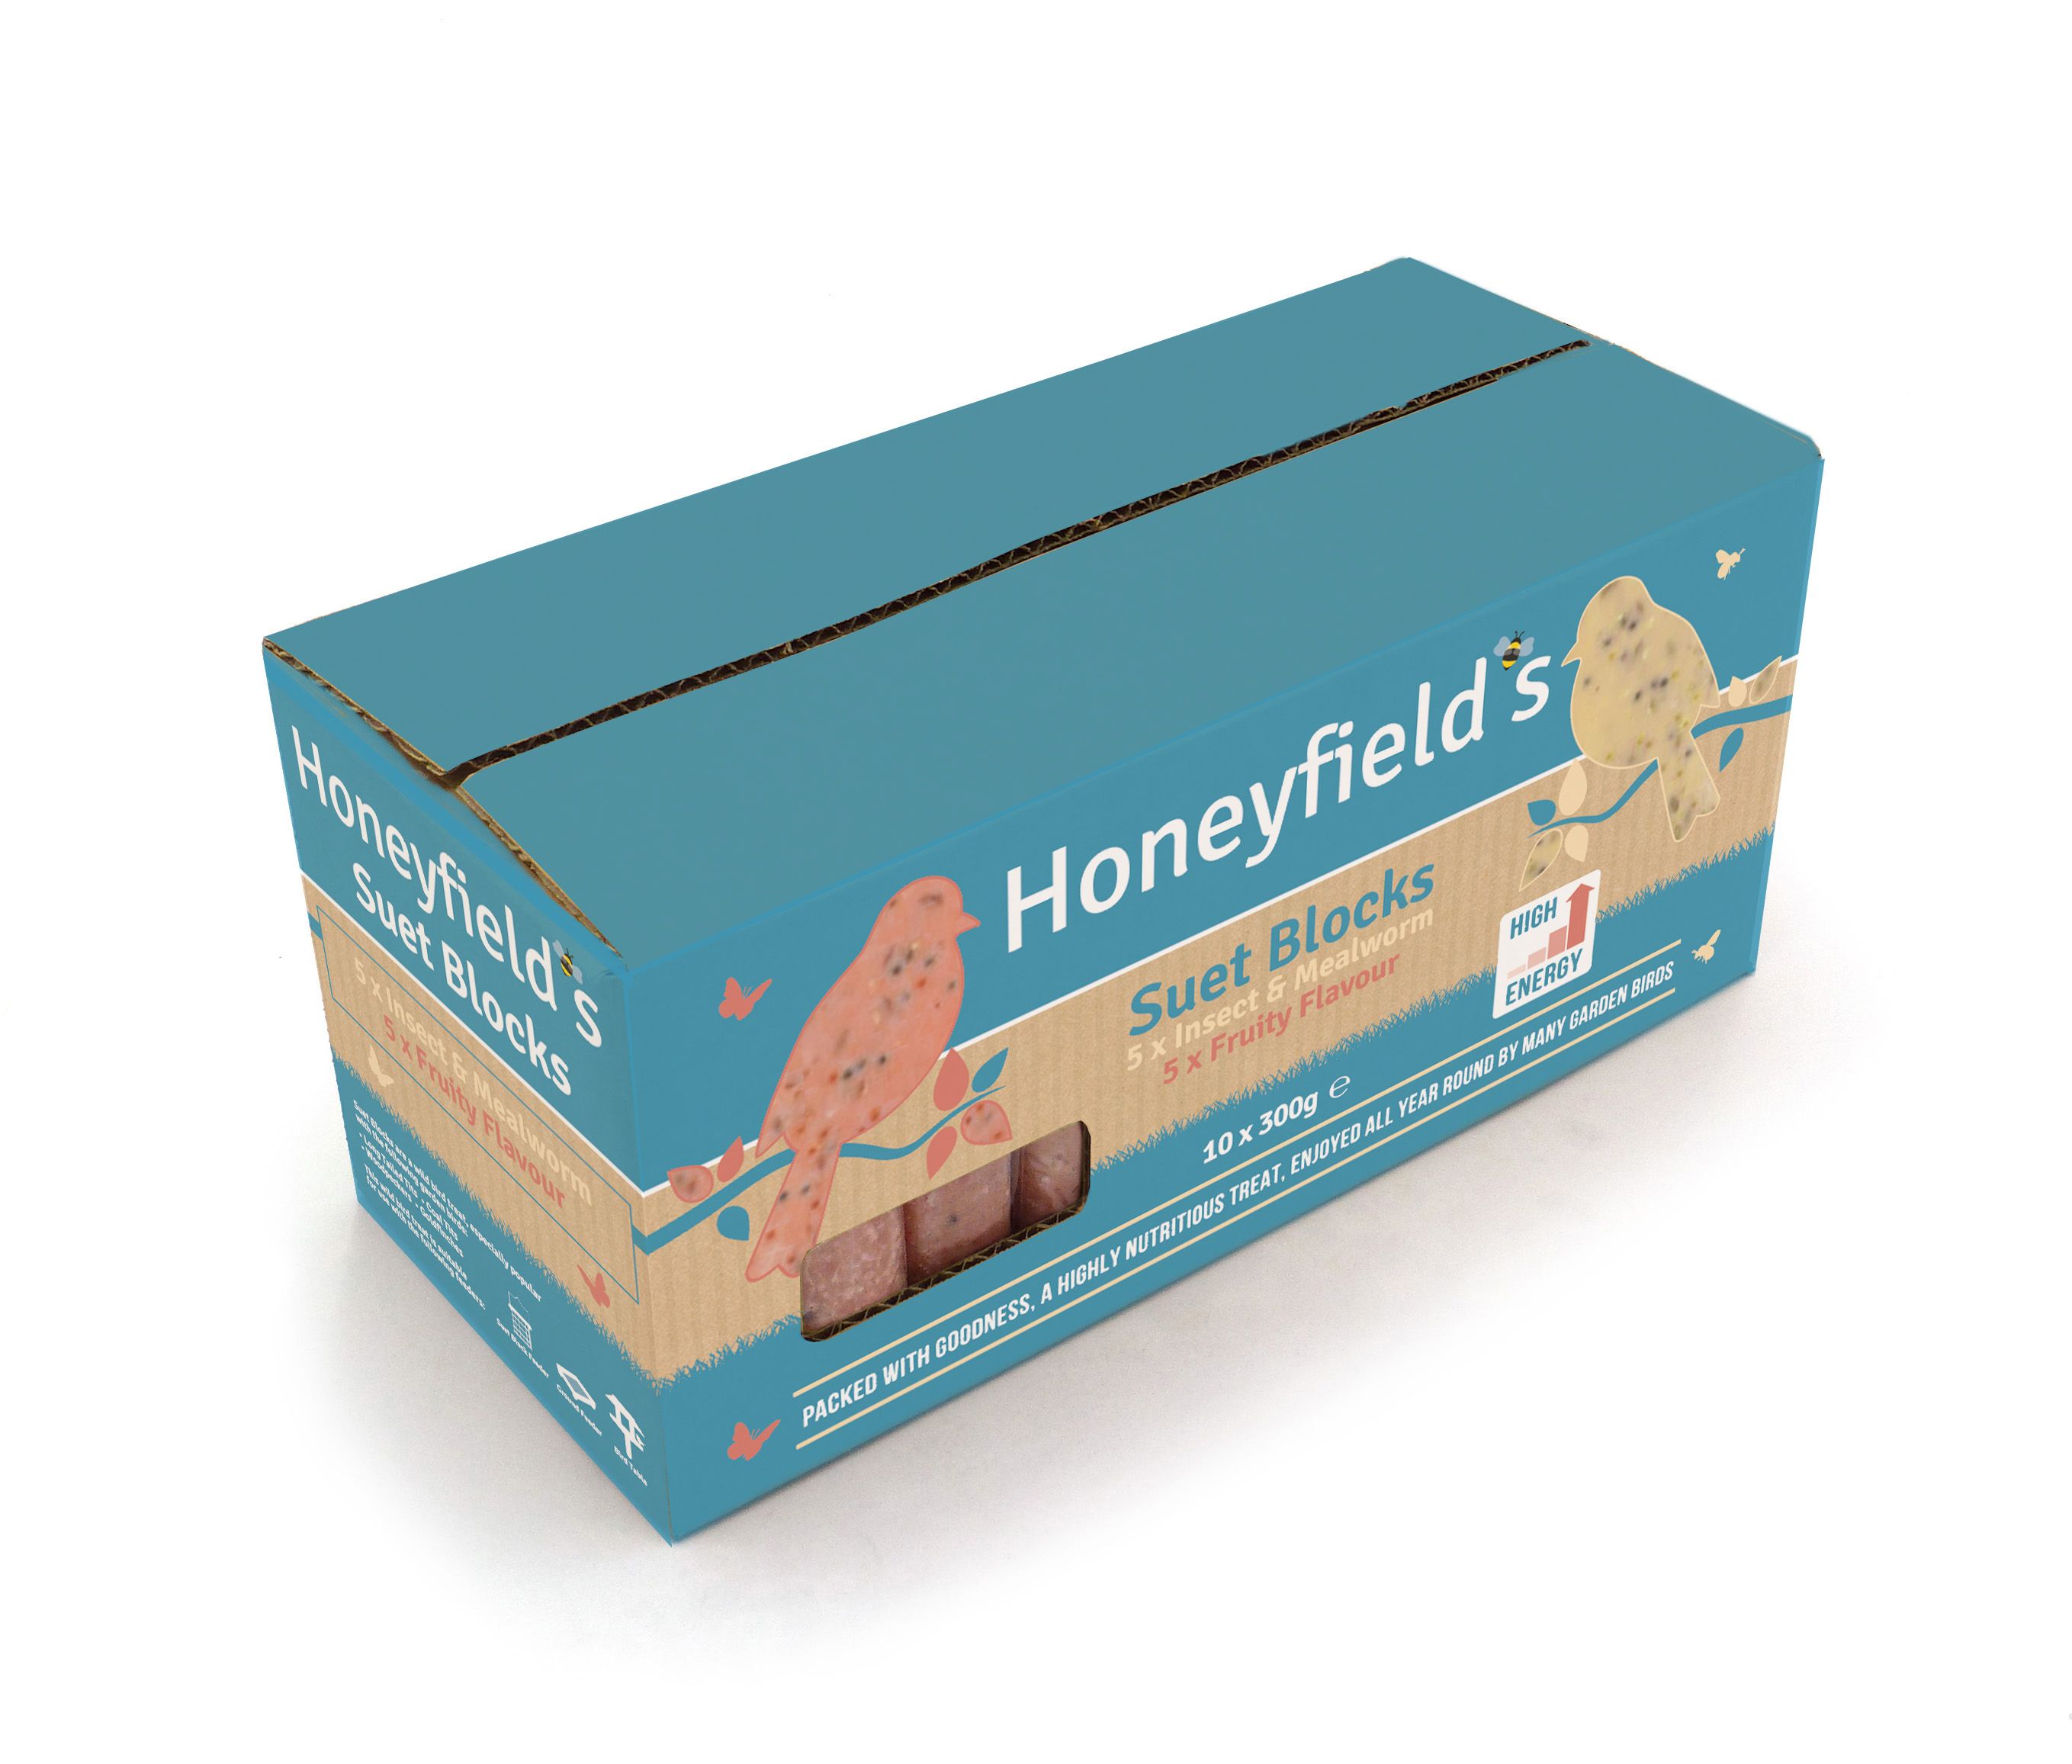 Honeyfield's Mixed Suet Blocks 10 Box